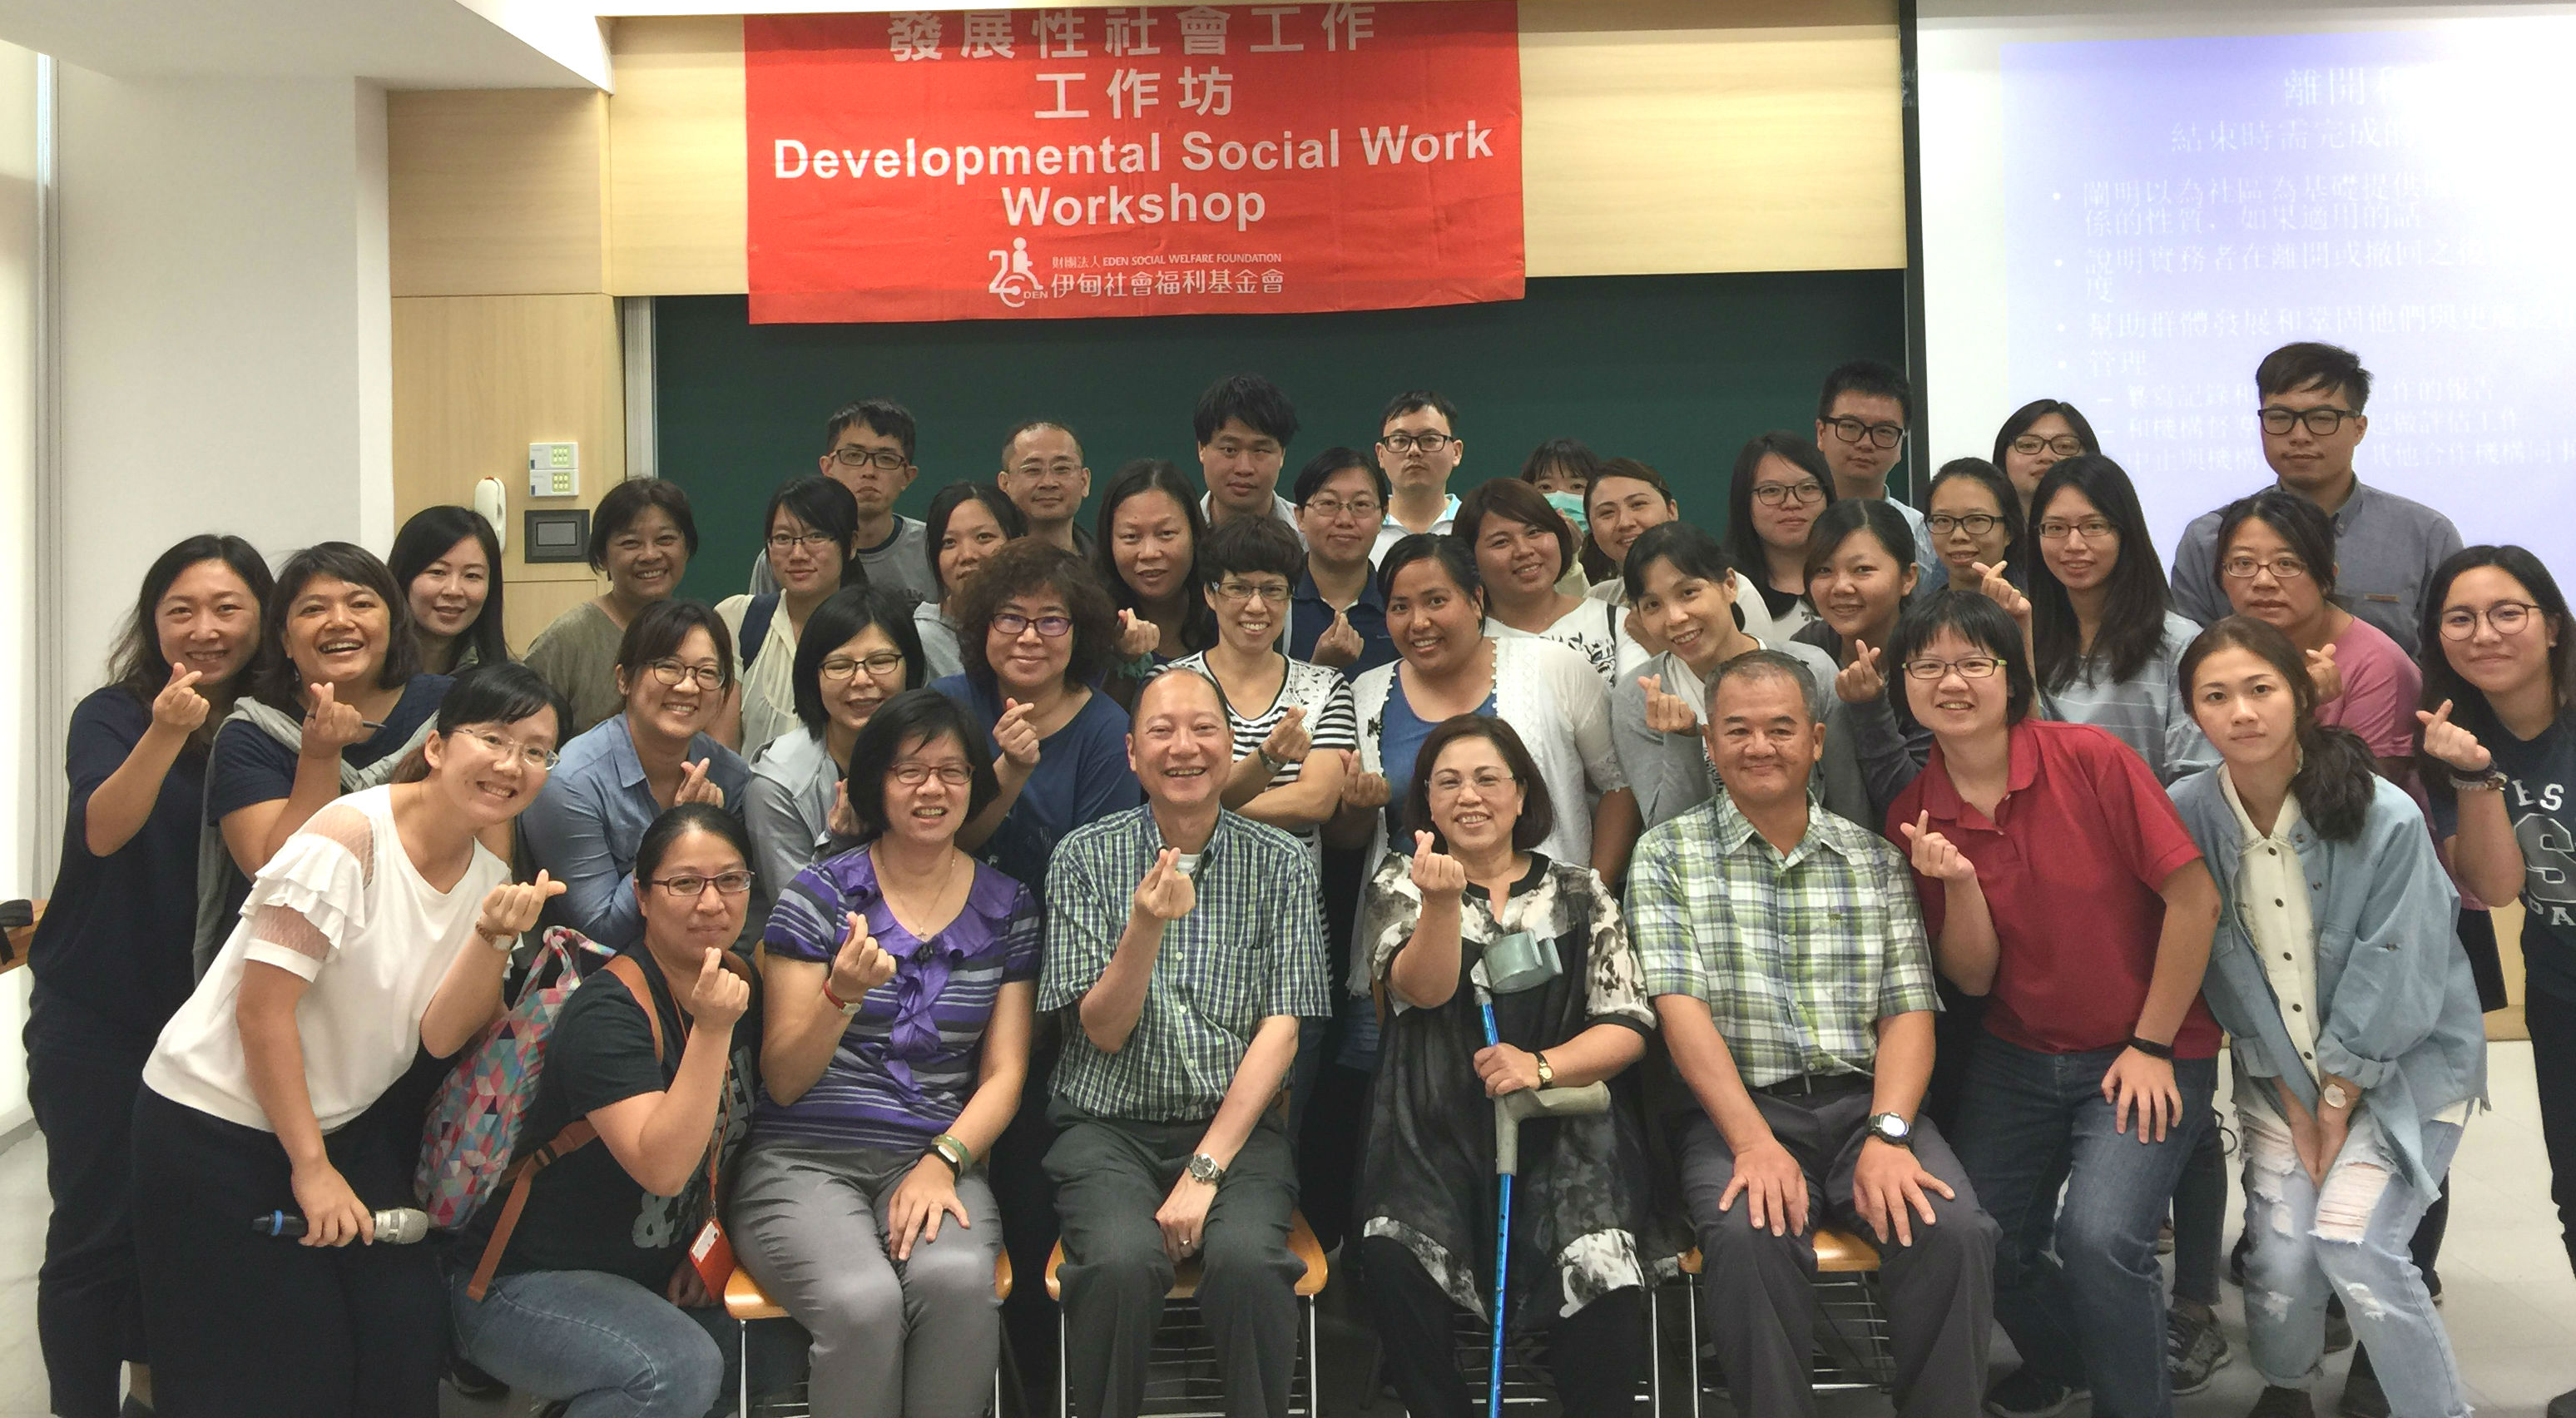 2017 Workshop on Developmental Social Work